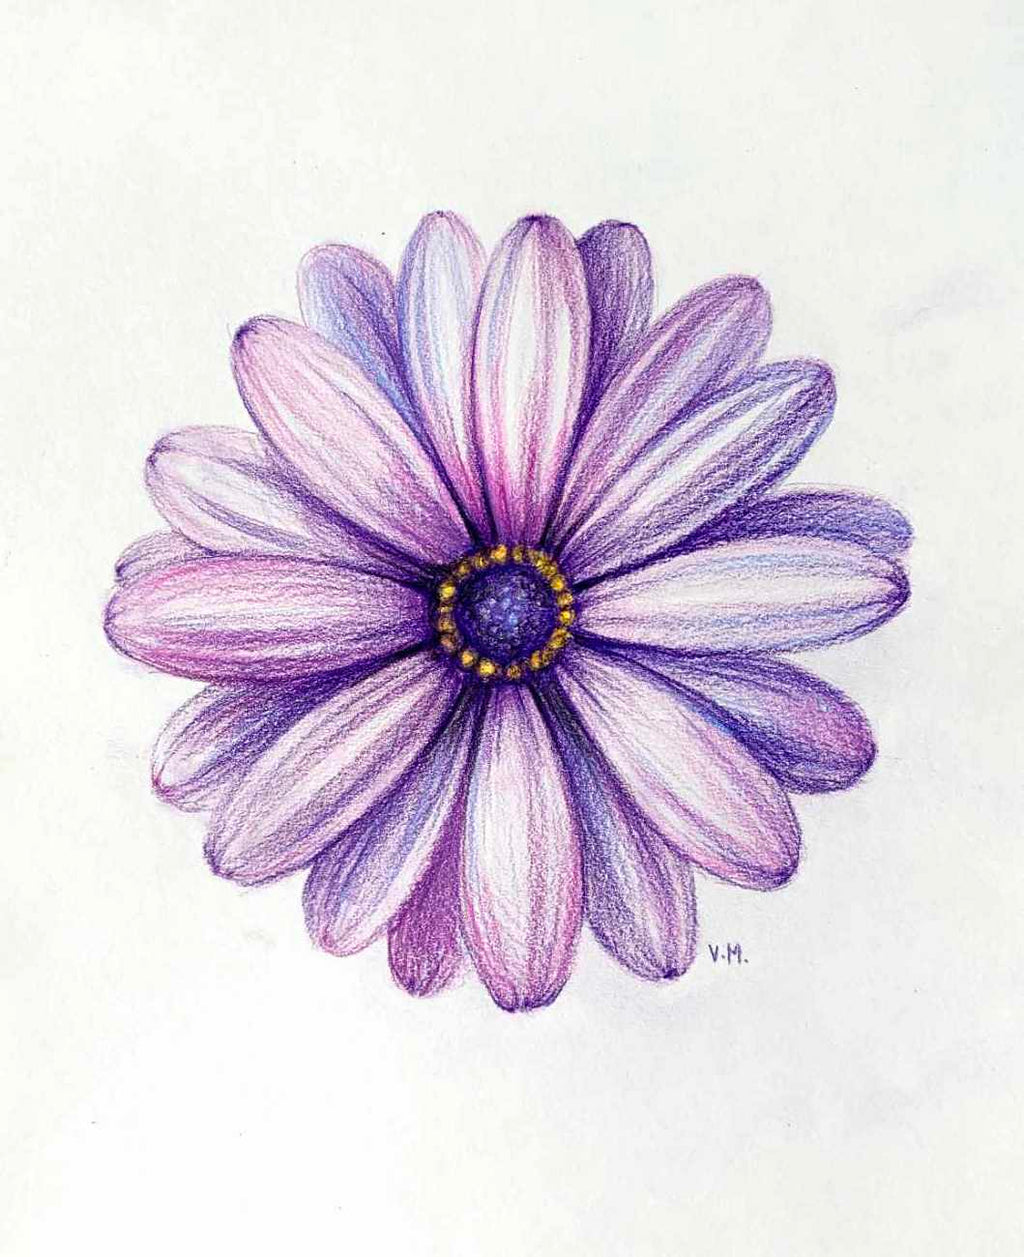 margarita flower drawing